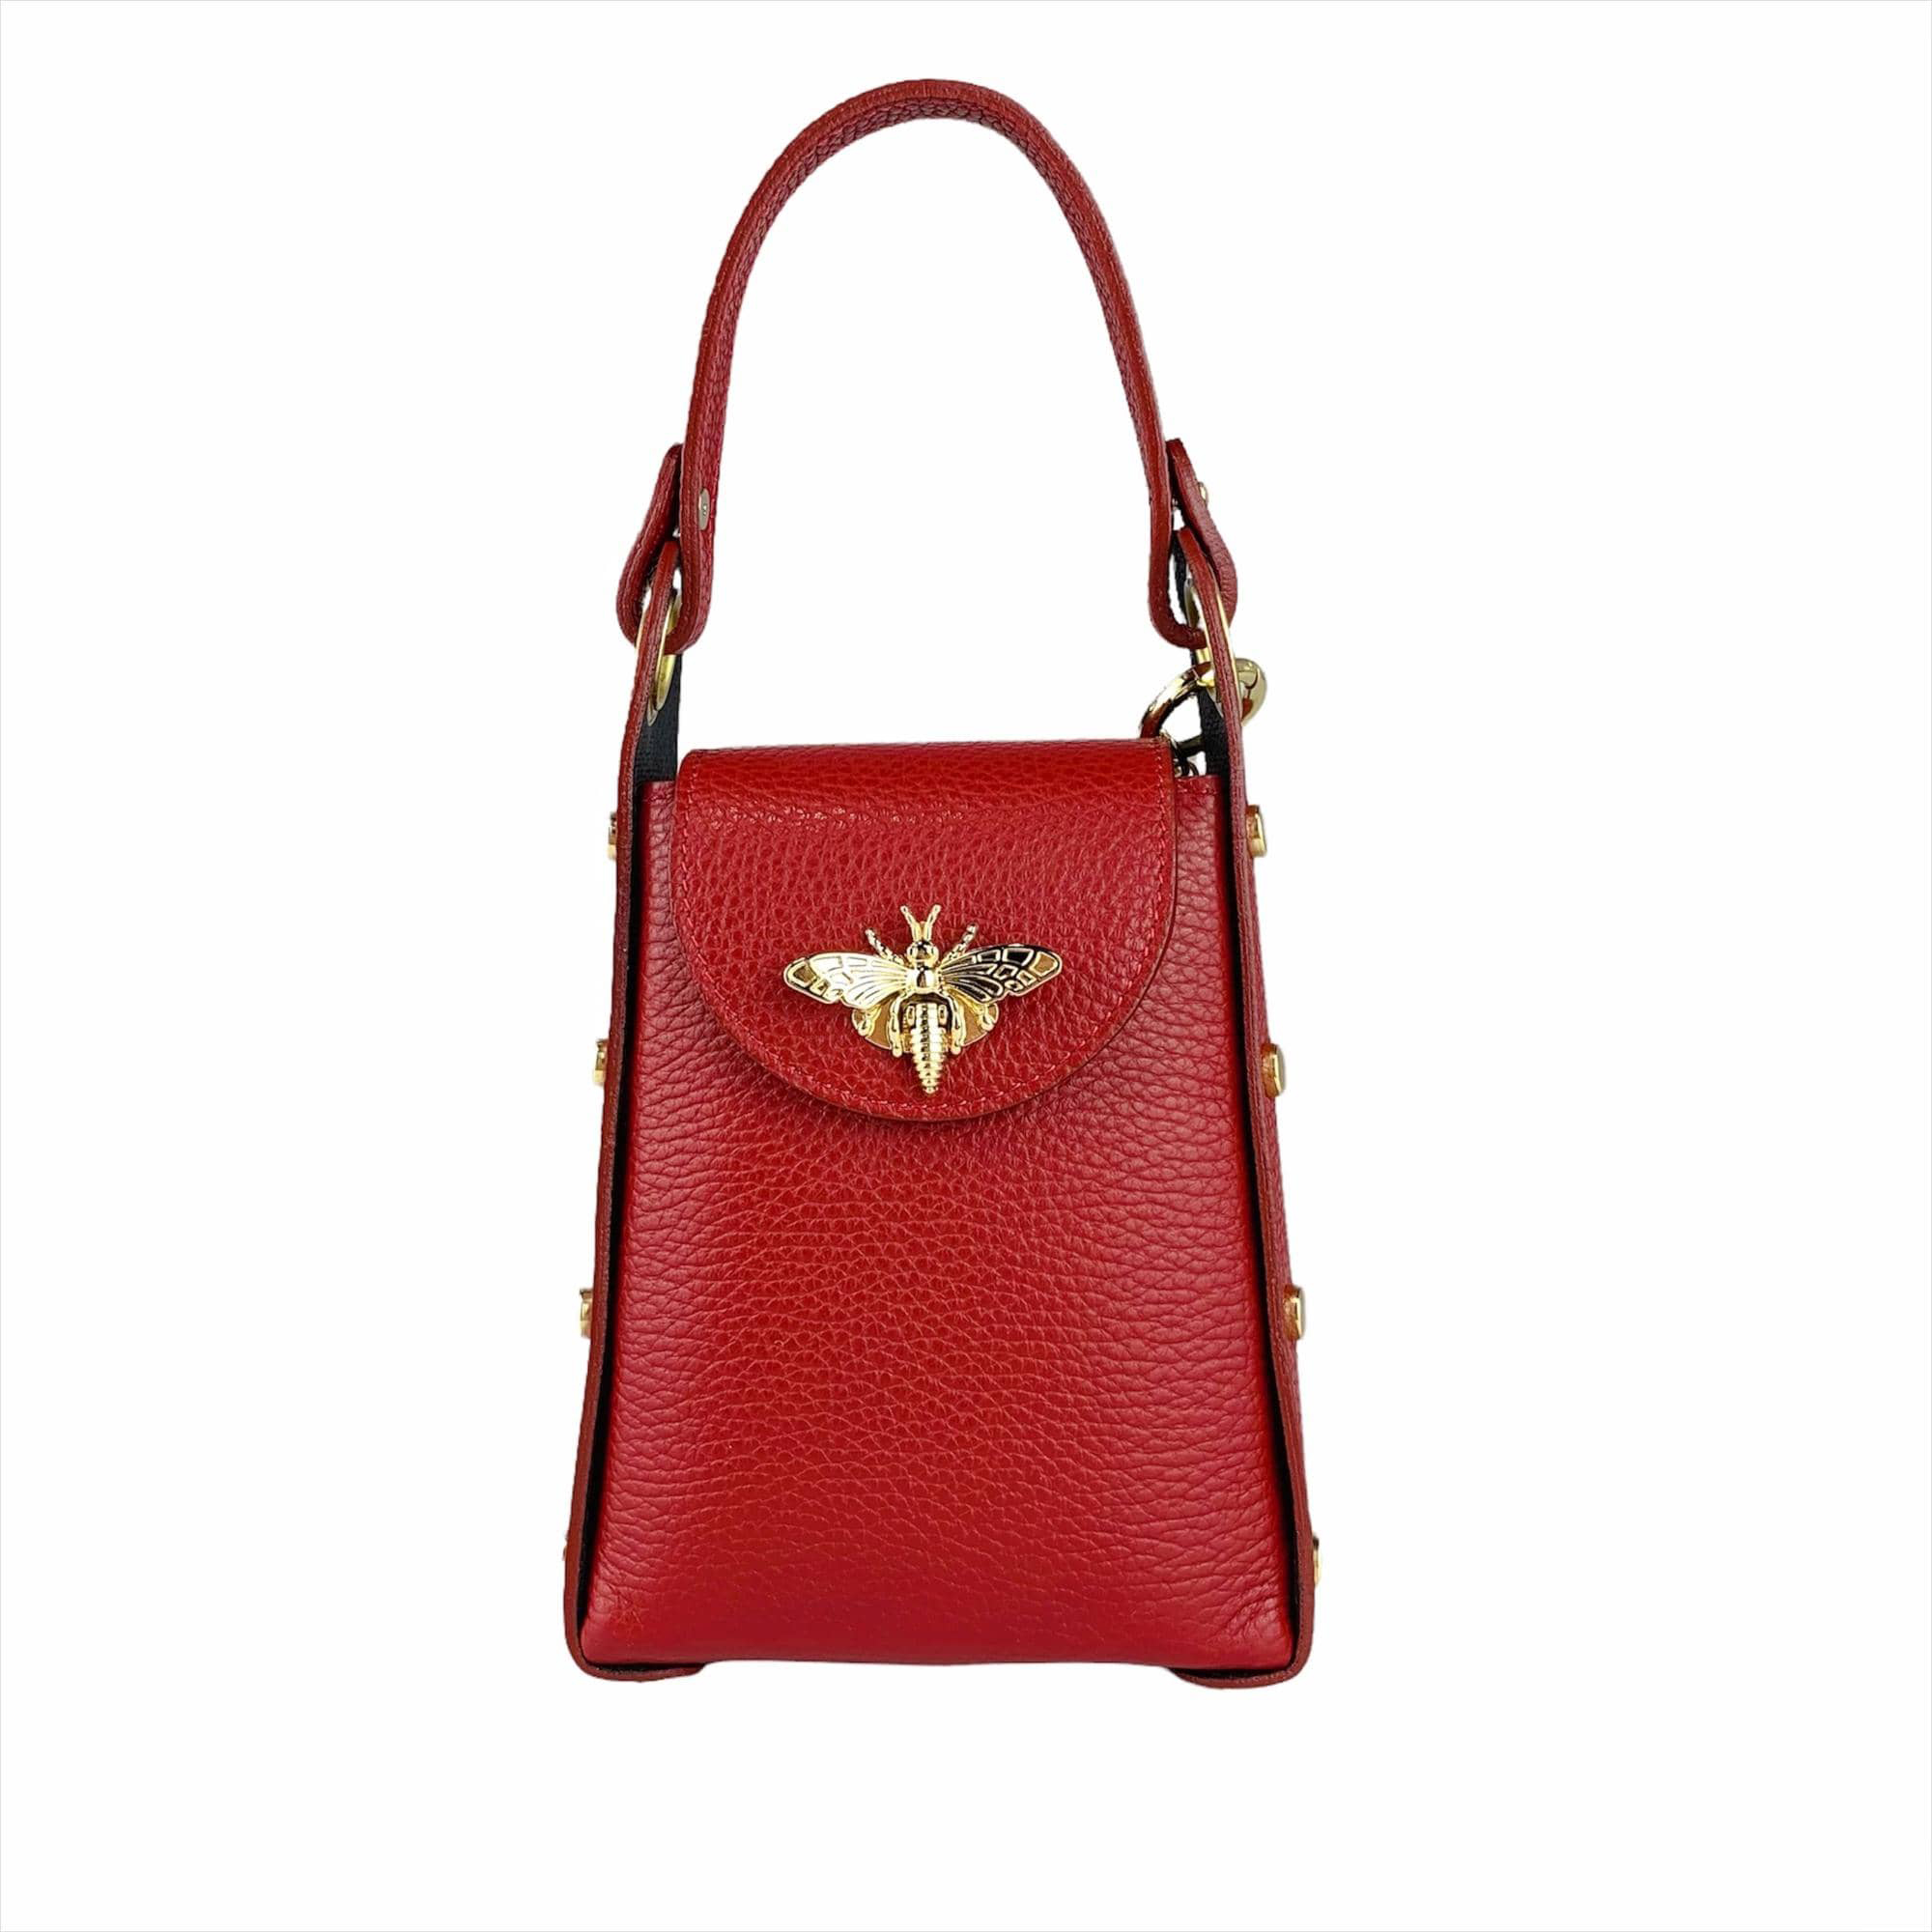 ITALY-Men's handmade genuine leather handbag with metal zip closure and  shoulder strap